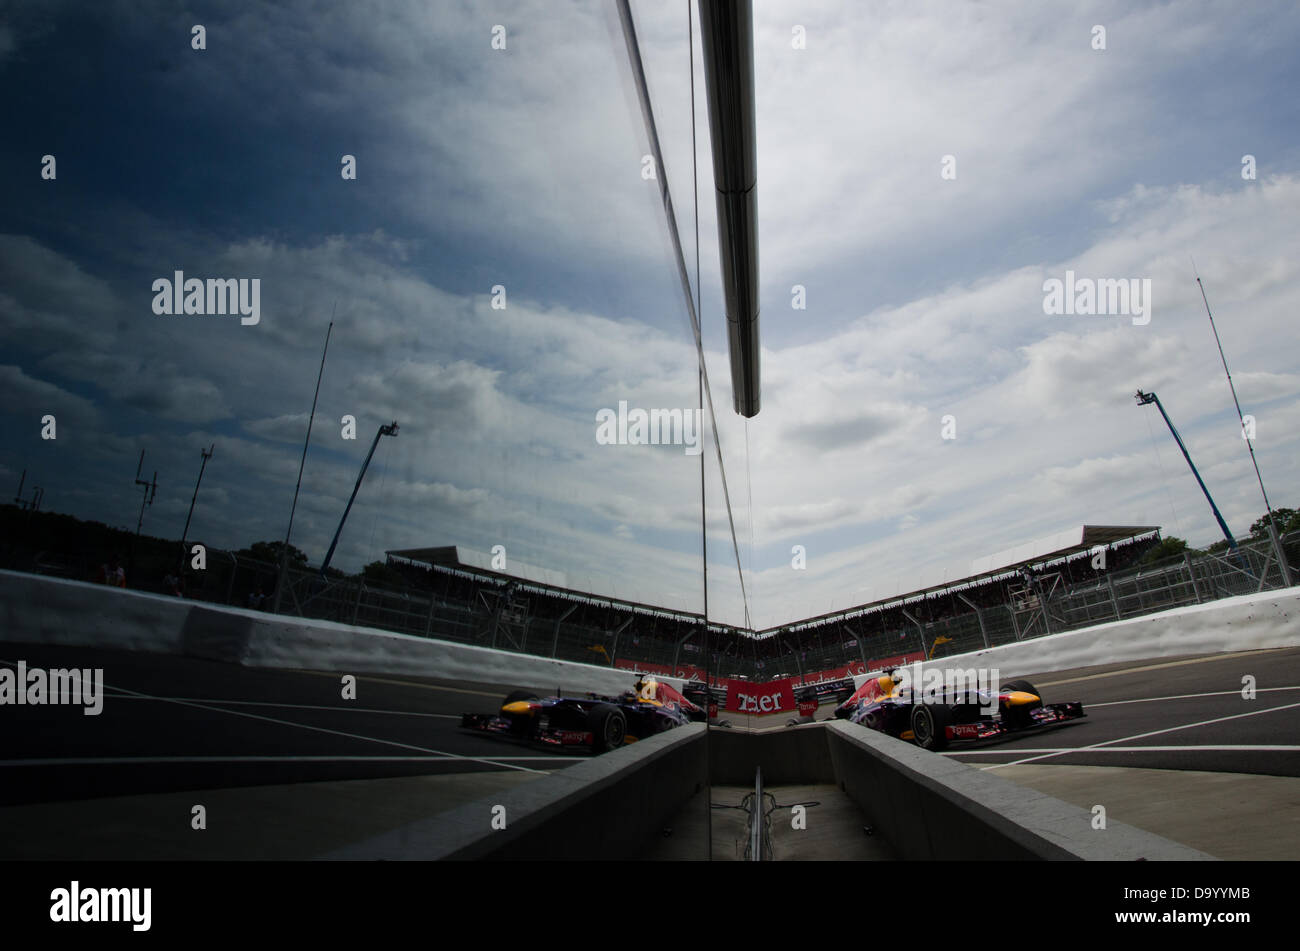 British Formula One (F1) Grand Prix, Silverstone, UK Stock Photo